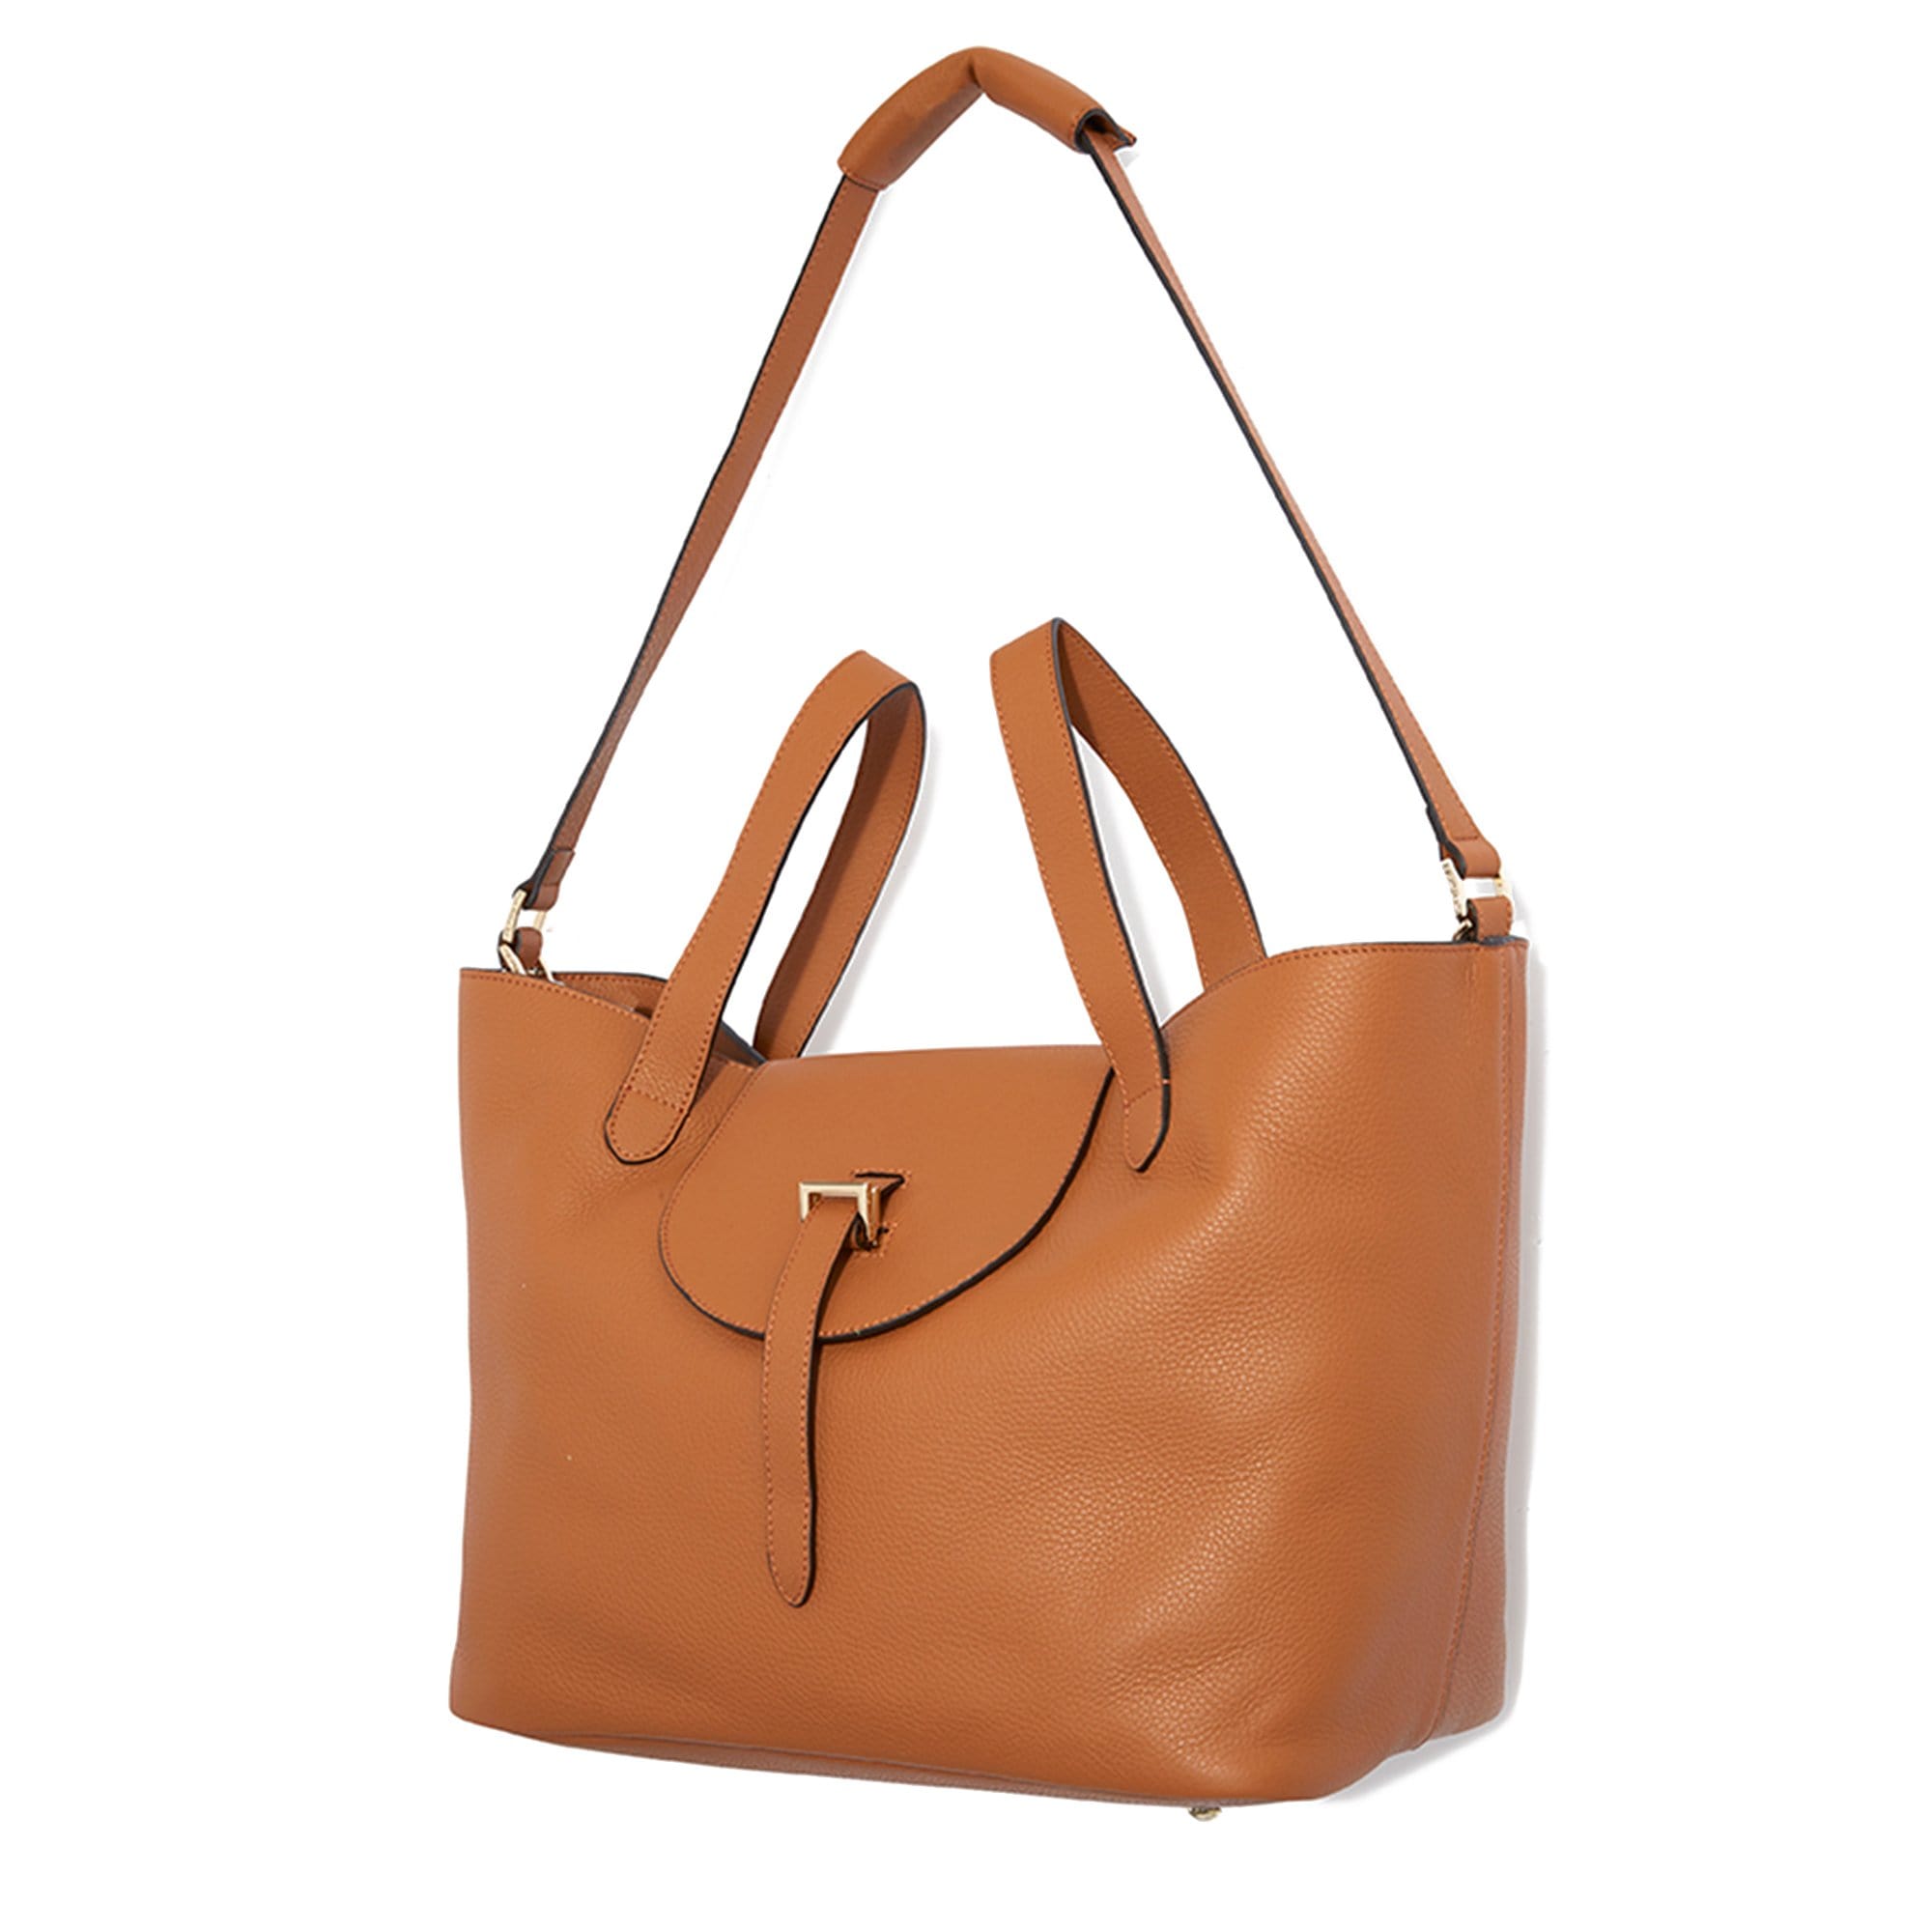 Thela Tan Tote Bag|Italian Handbag|meli melo